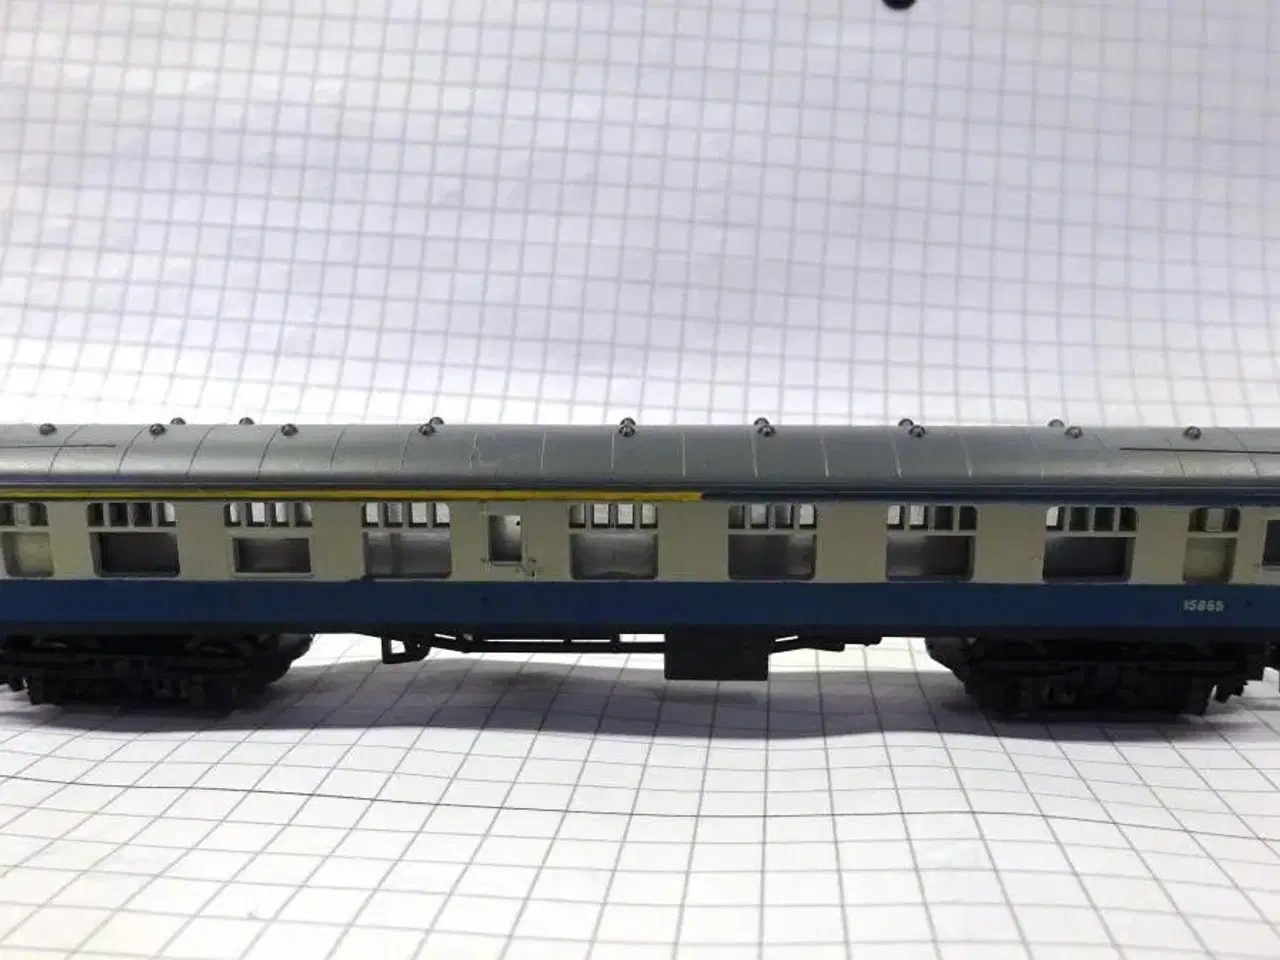 Billede 6 - Minitrix togvogne.